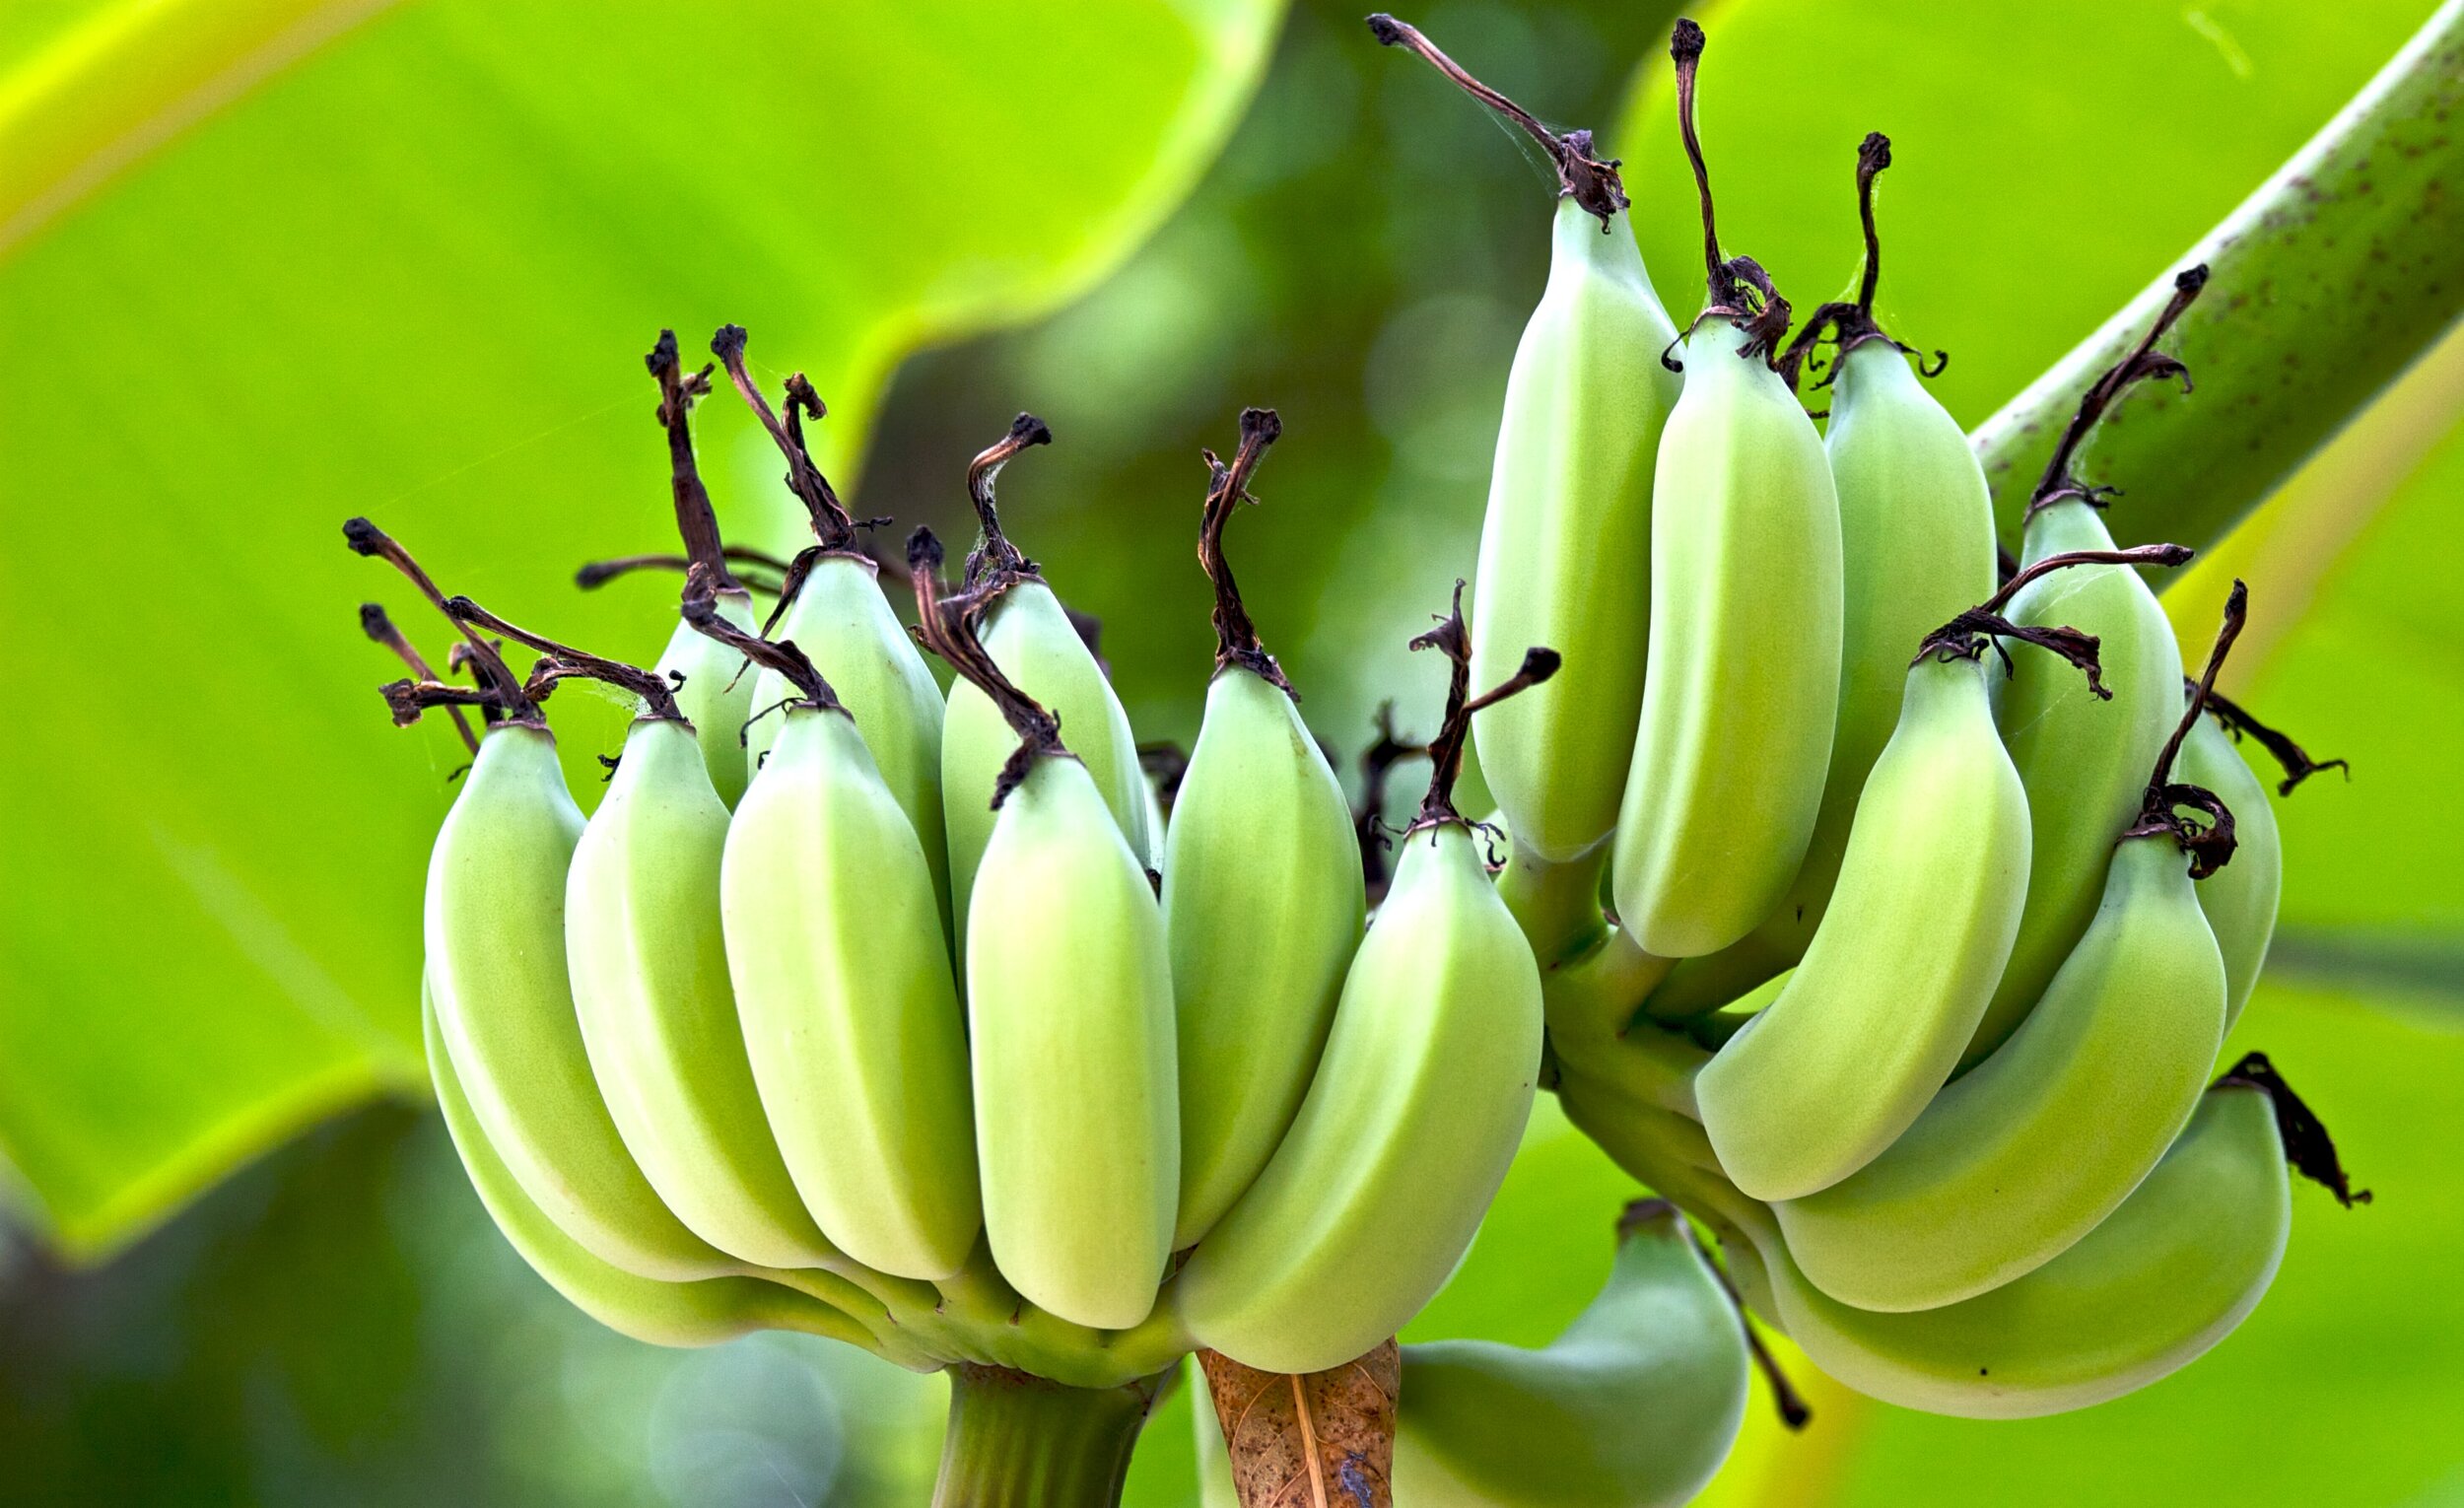 Банан это фрукт ягода трава или овощ